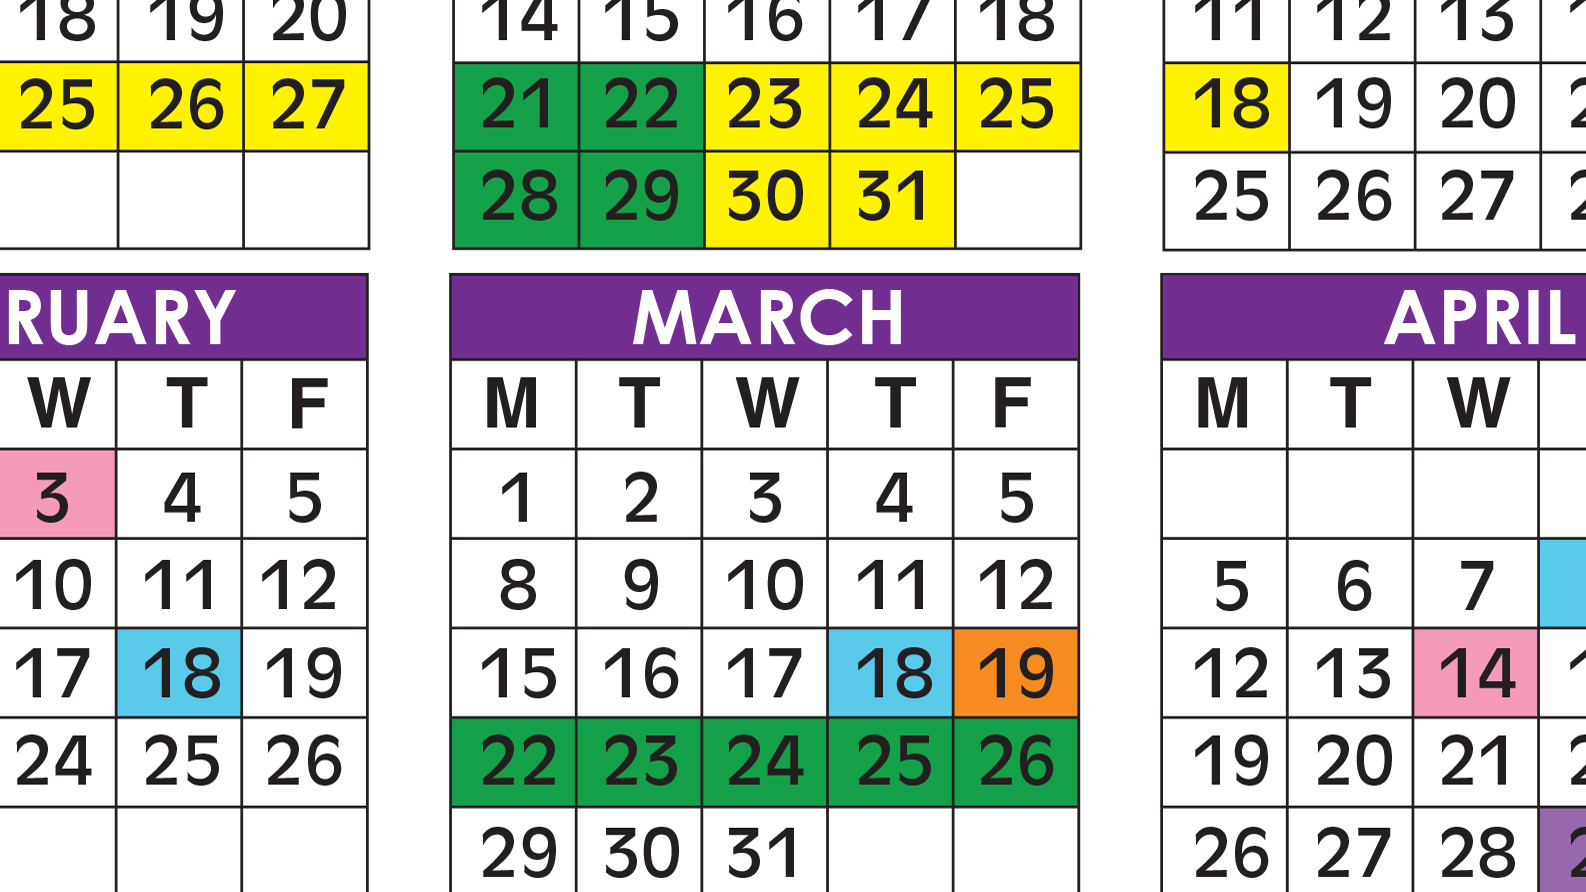 Broward County School Calendar 2021-22 Official 2020/21 Broward County Public Schools Color Calendar 